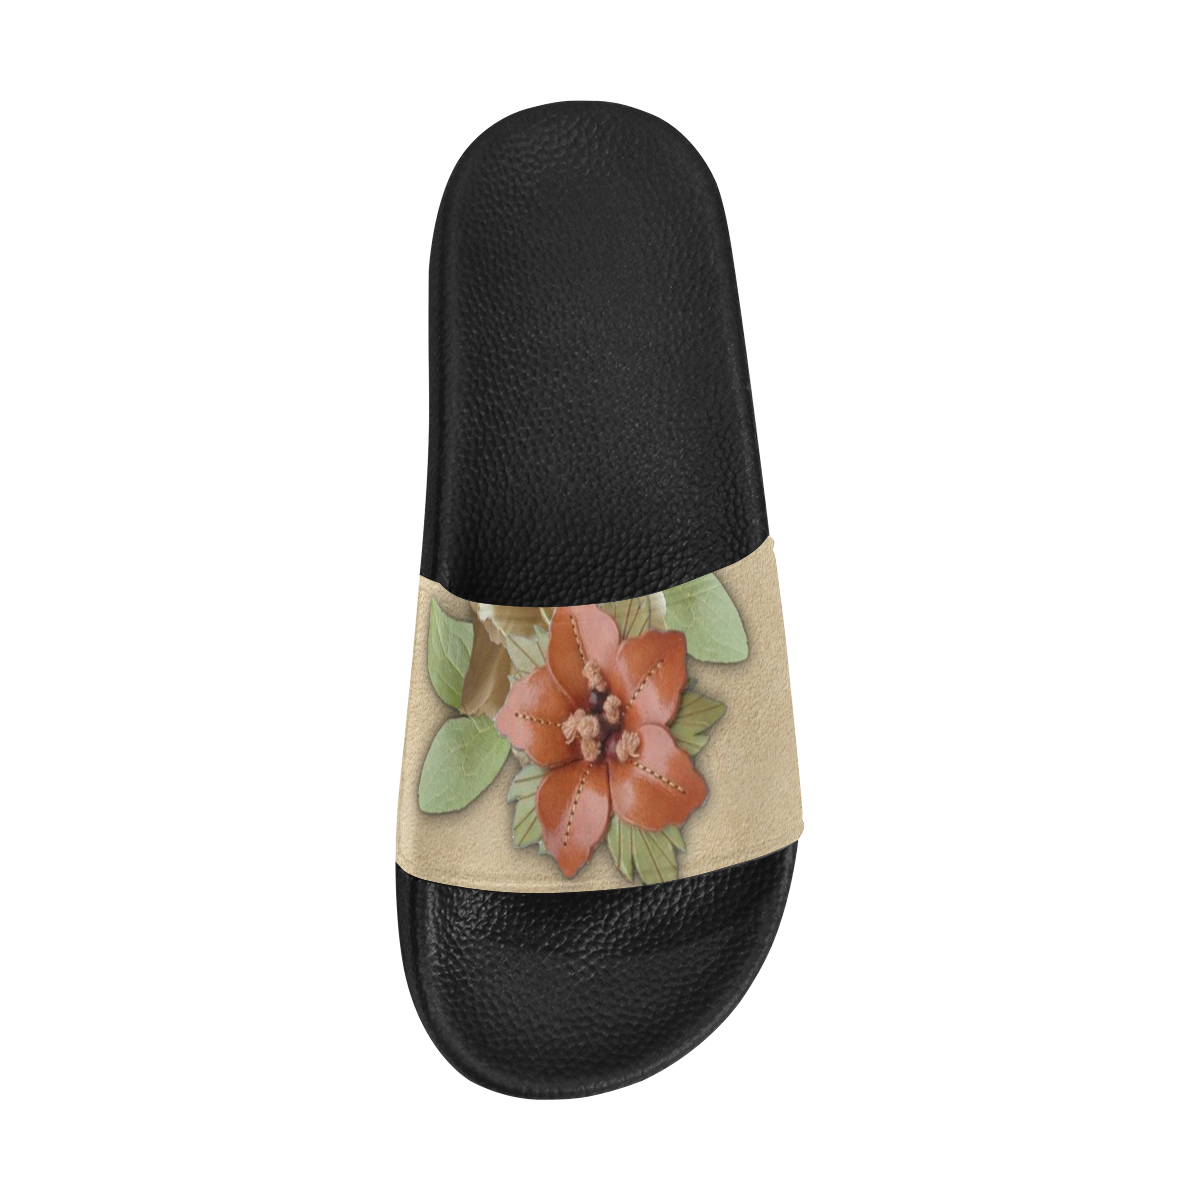 Leather flowers on suede Women's Slide Sandals (Model 057)